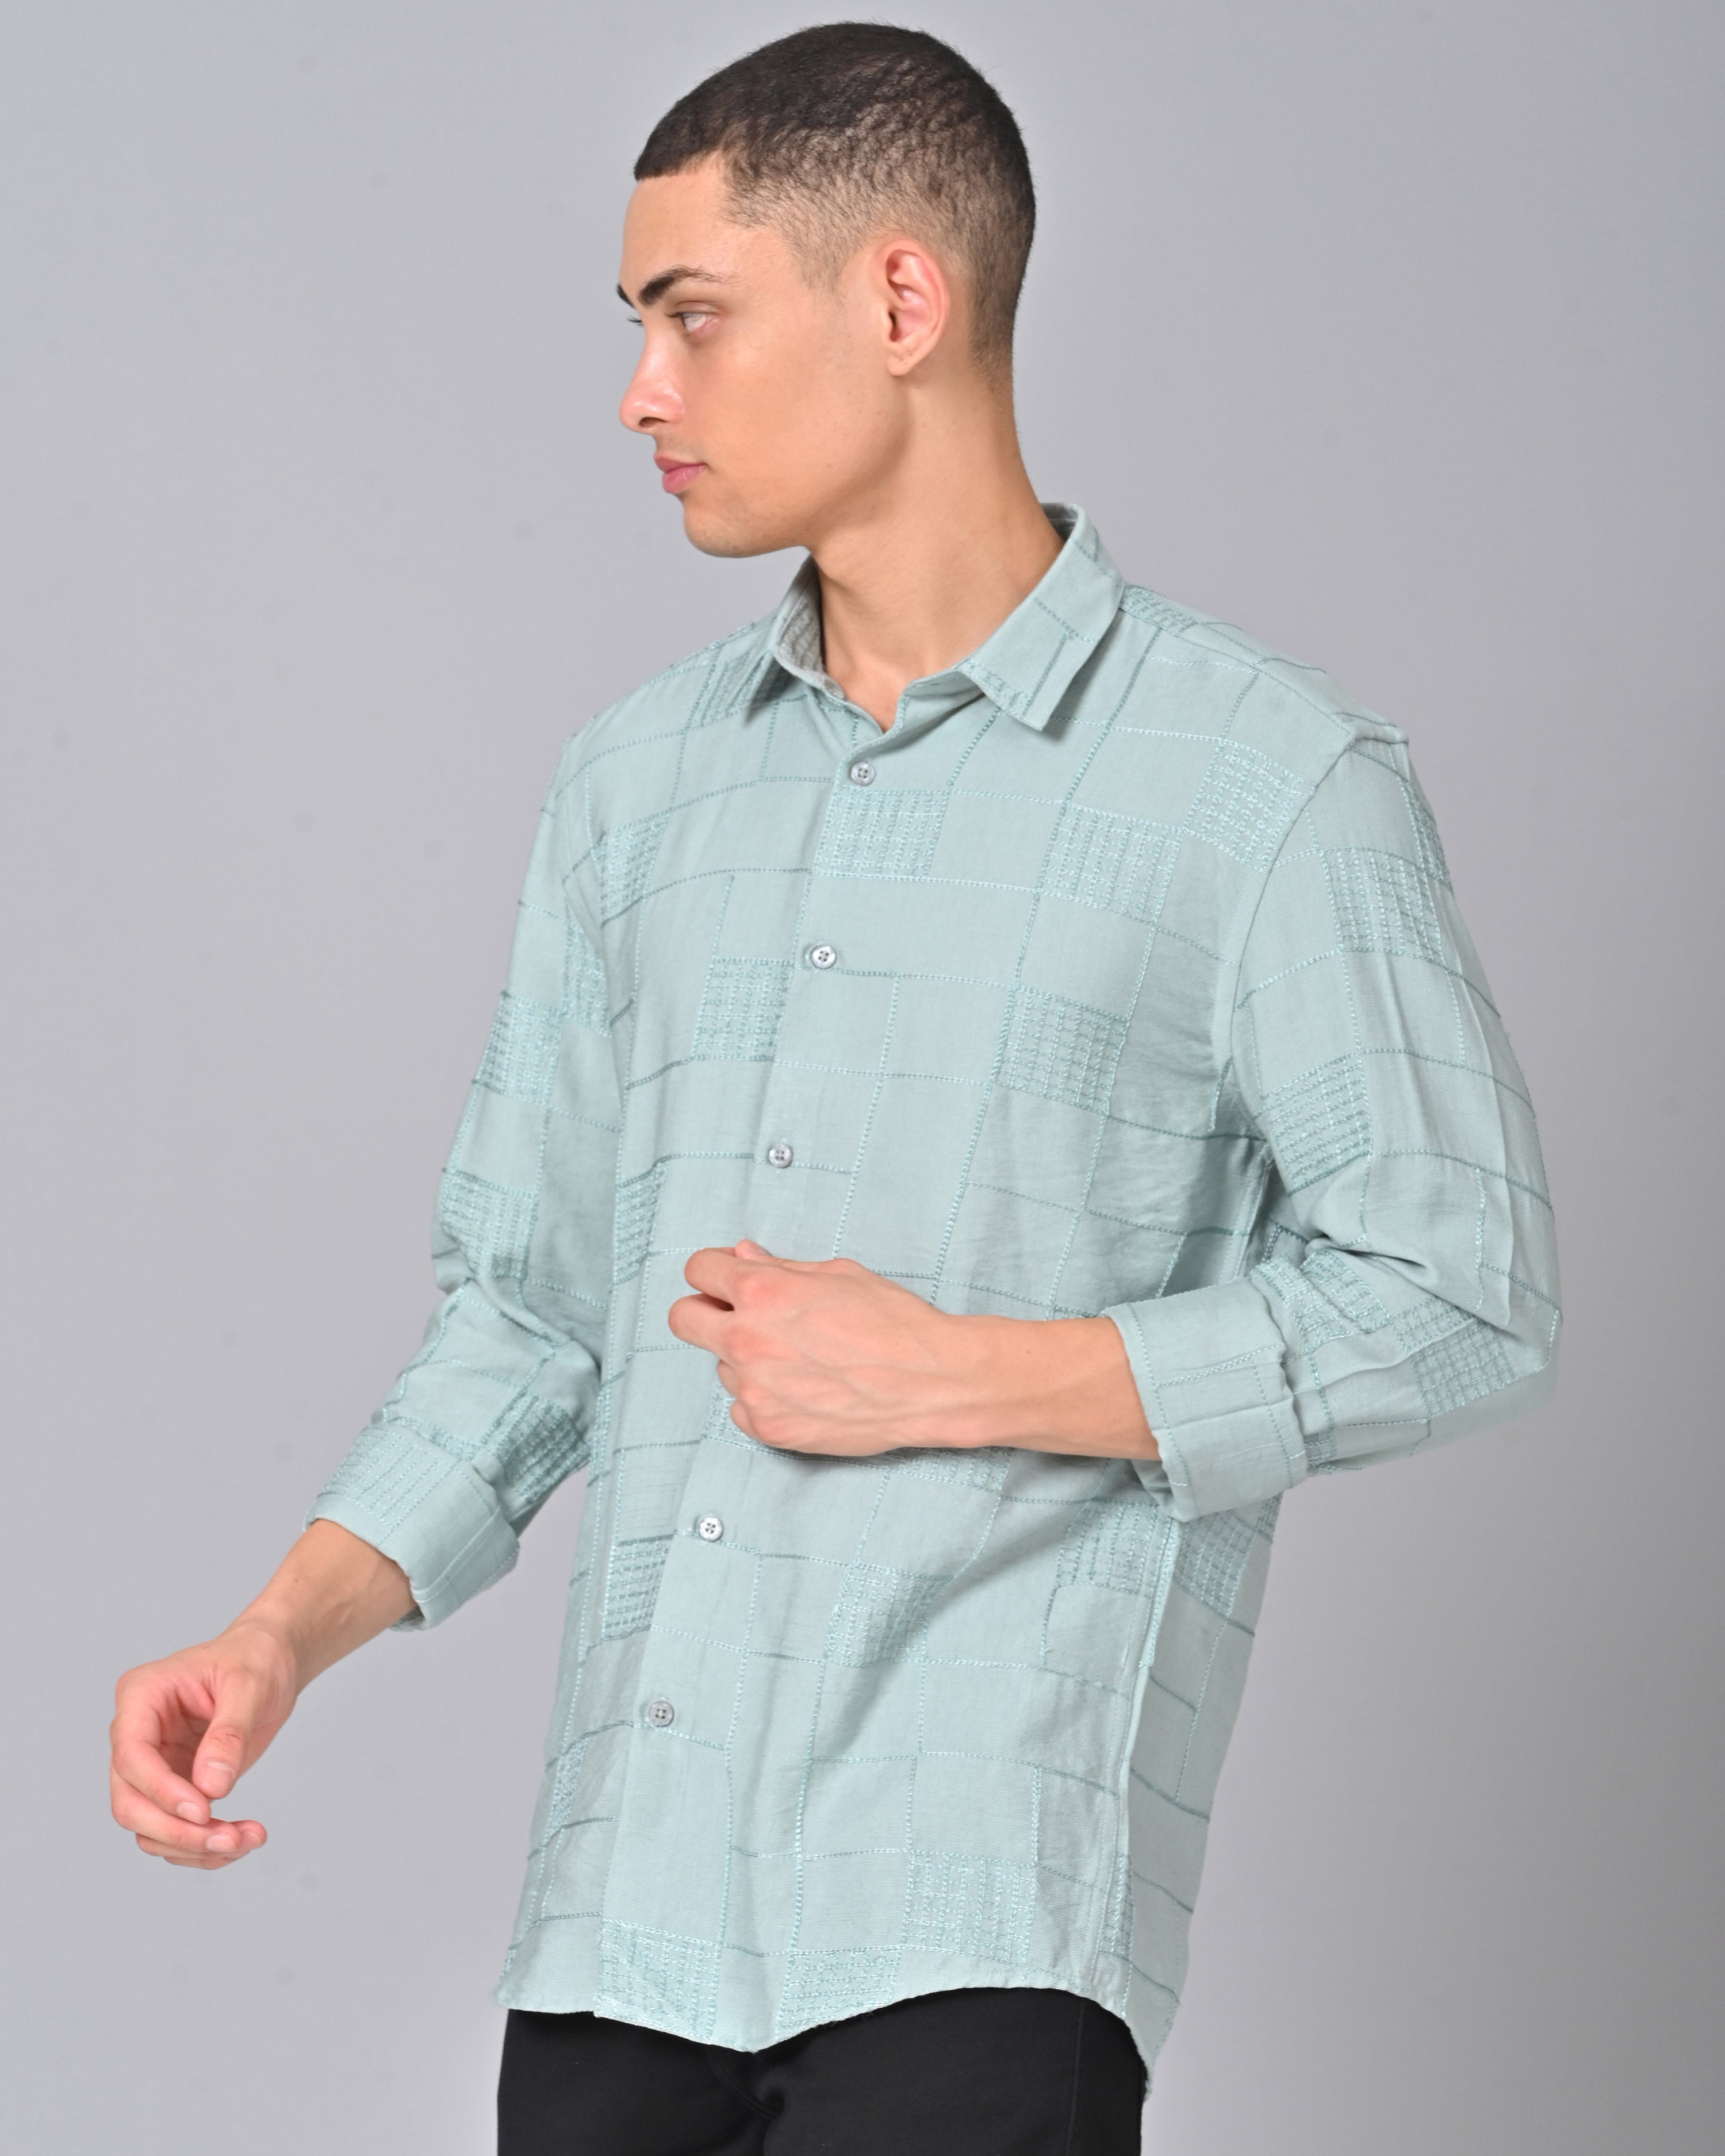 Men's Embroidered Cotton Misty Blue Shirt Online